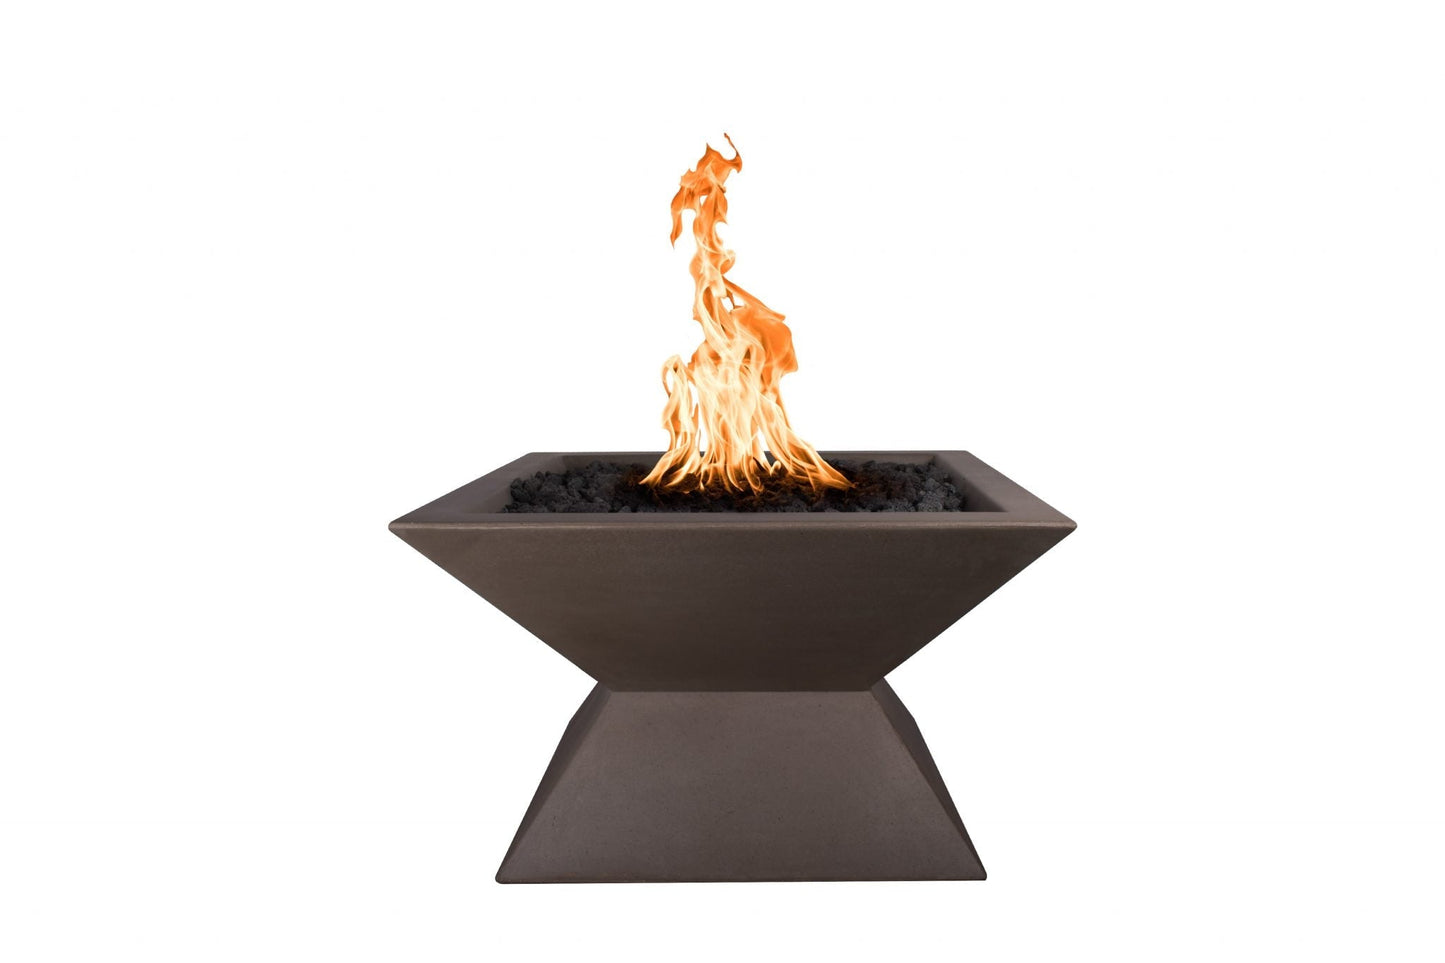 The Outdoor Plus Square Uxmal 30" Metallic Bronze GFRC Concrete Liquid Propane Fire Pit with Match Lit Ignition